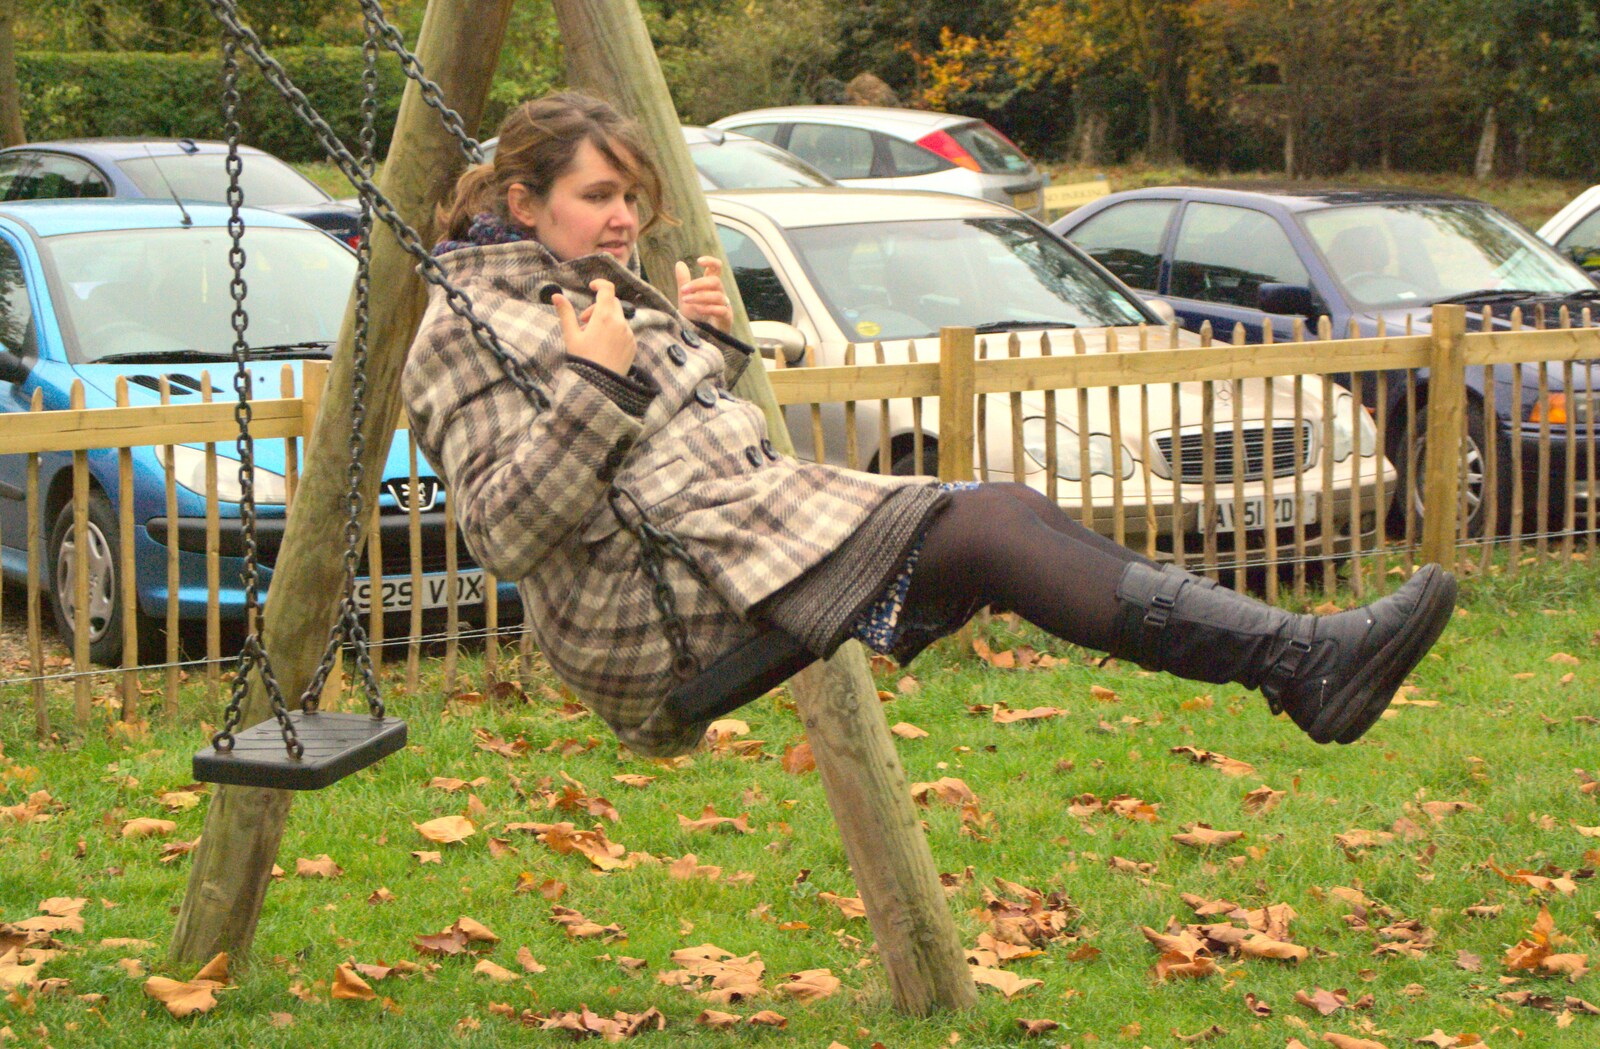 Isobel swings out from Autumn in Thornham Estate, Thornham, Suffolk - 6th November 2011